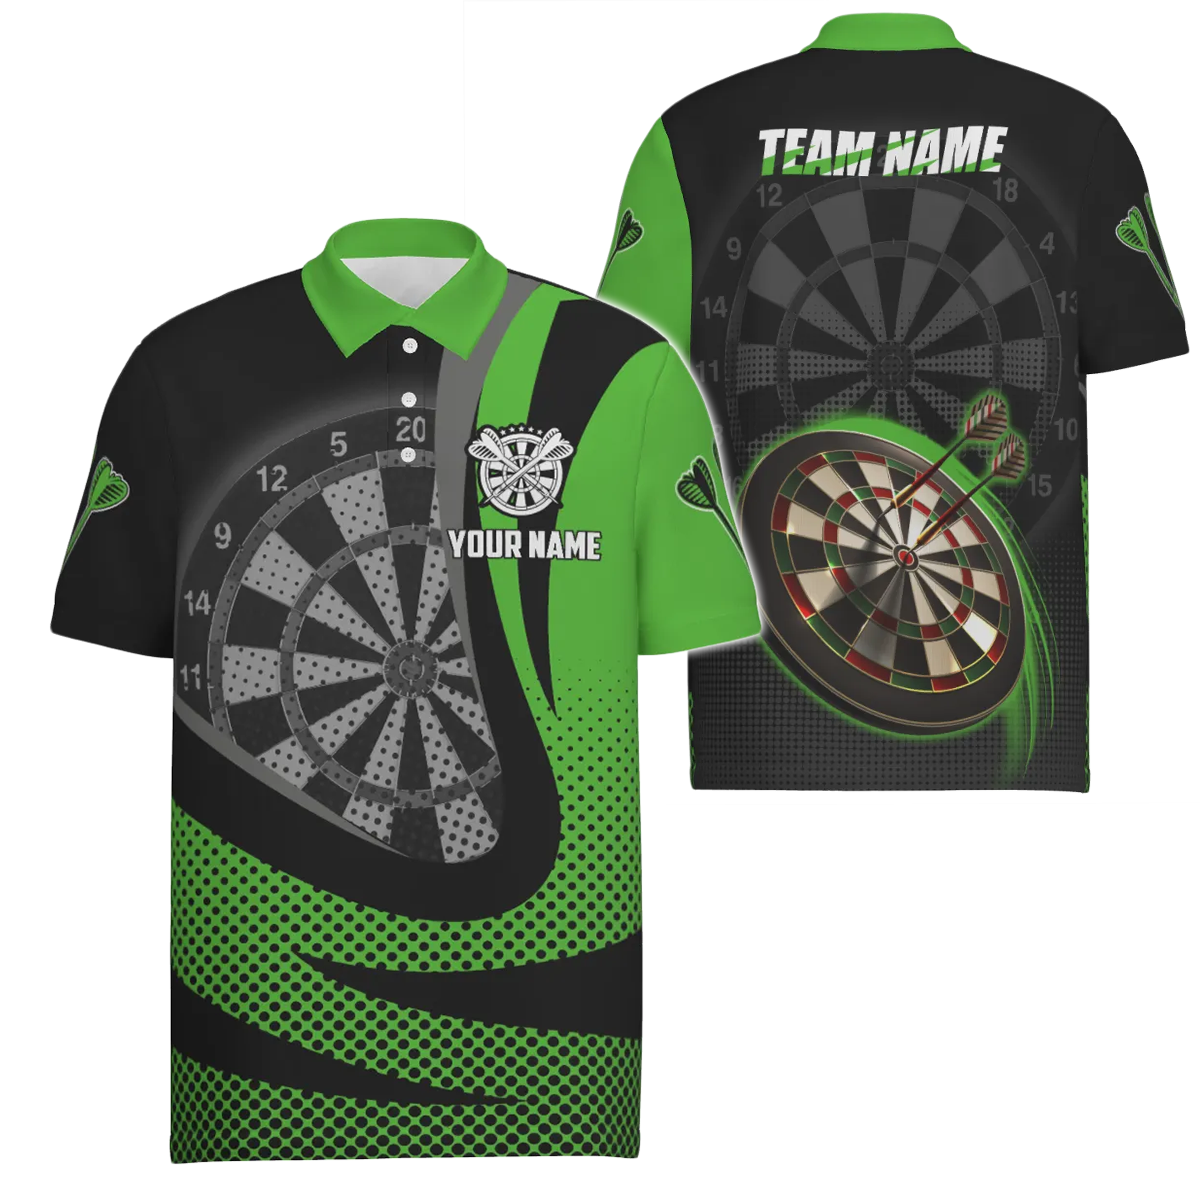 Black Green 3D Men's Darts Polo Shirt - Cool Darts Team Jersey for Men X189 Green